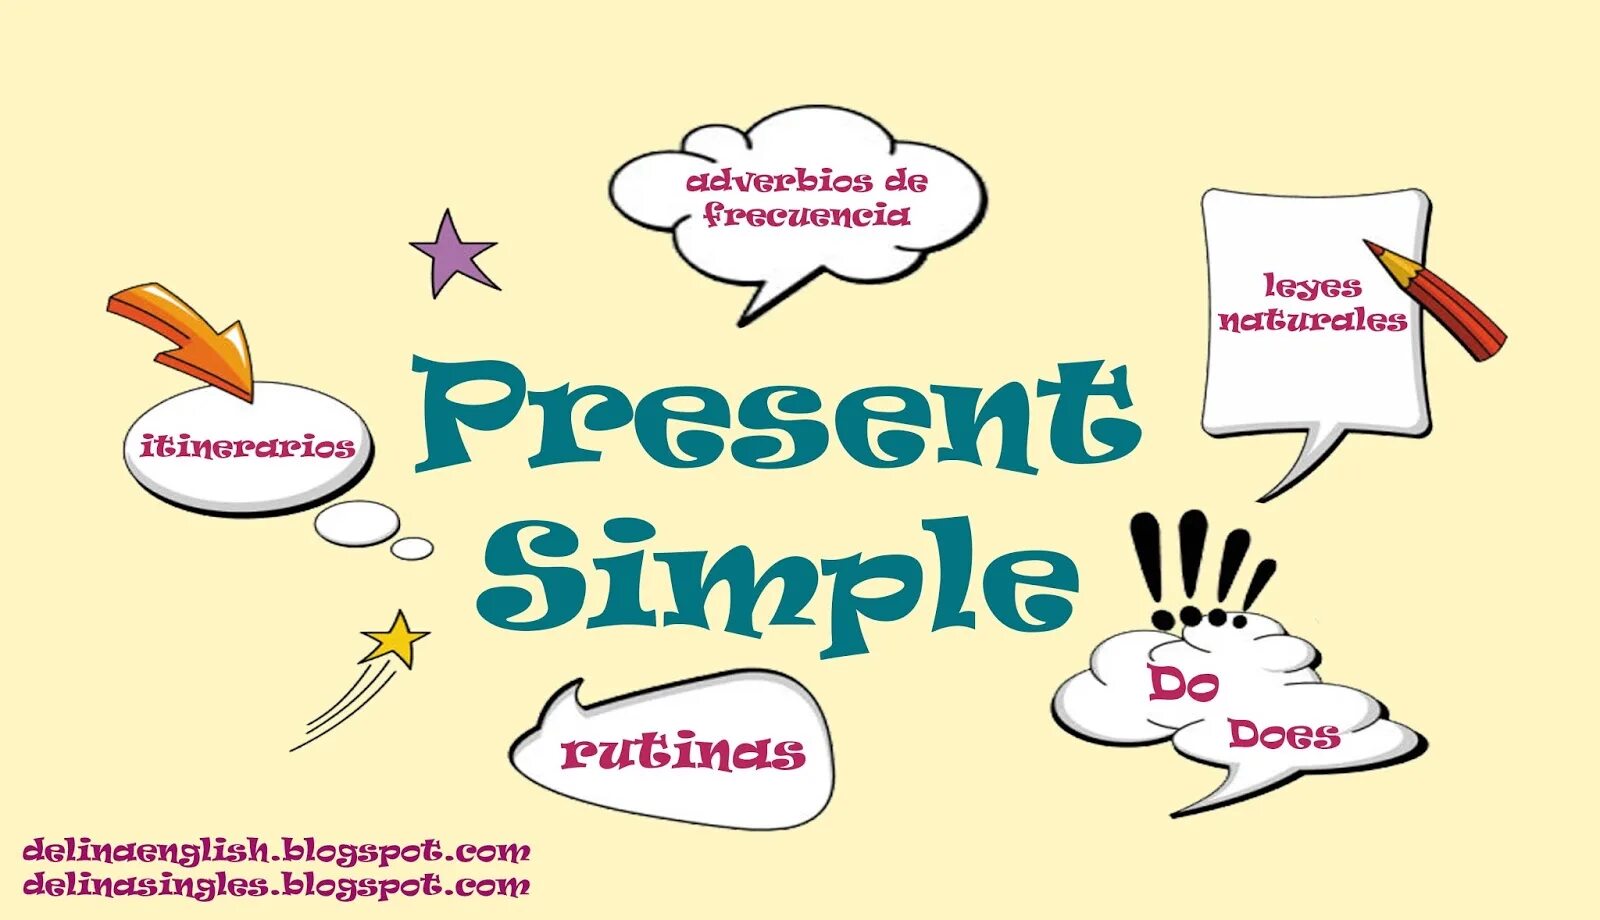 Present simple. Present simple для детей. Презент Симпл картинки. Present simple картинки.